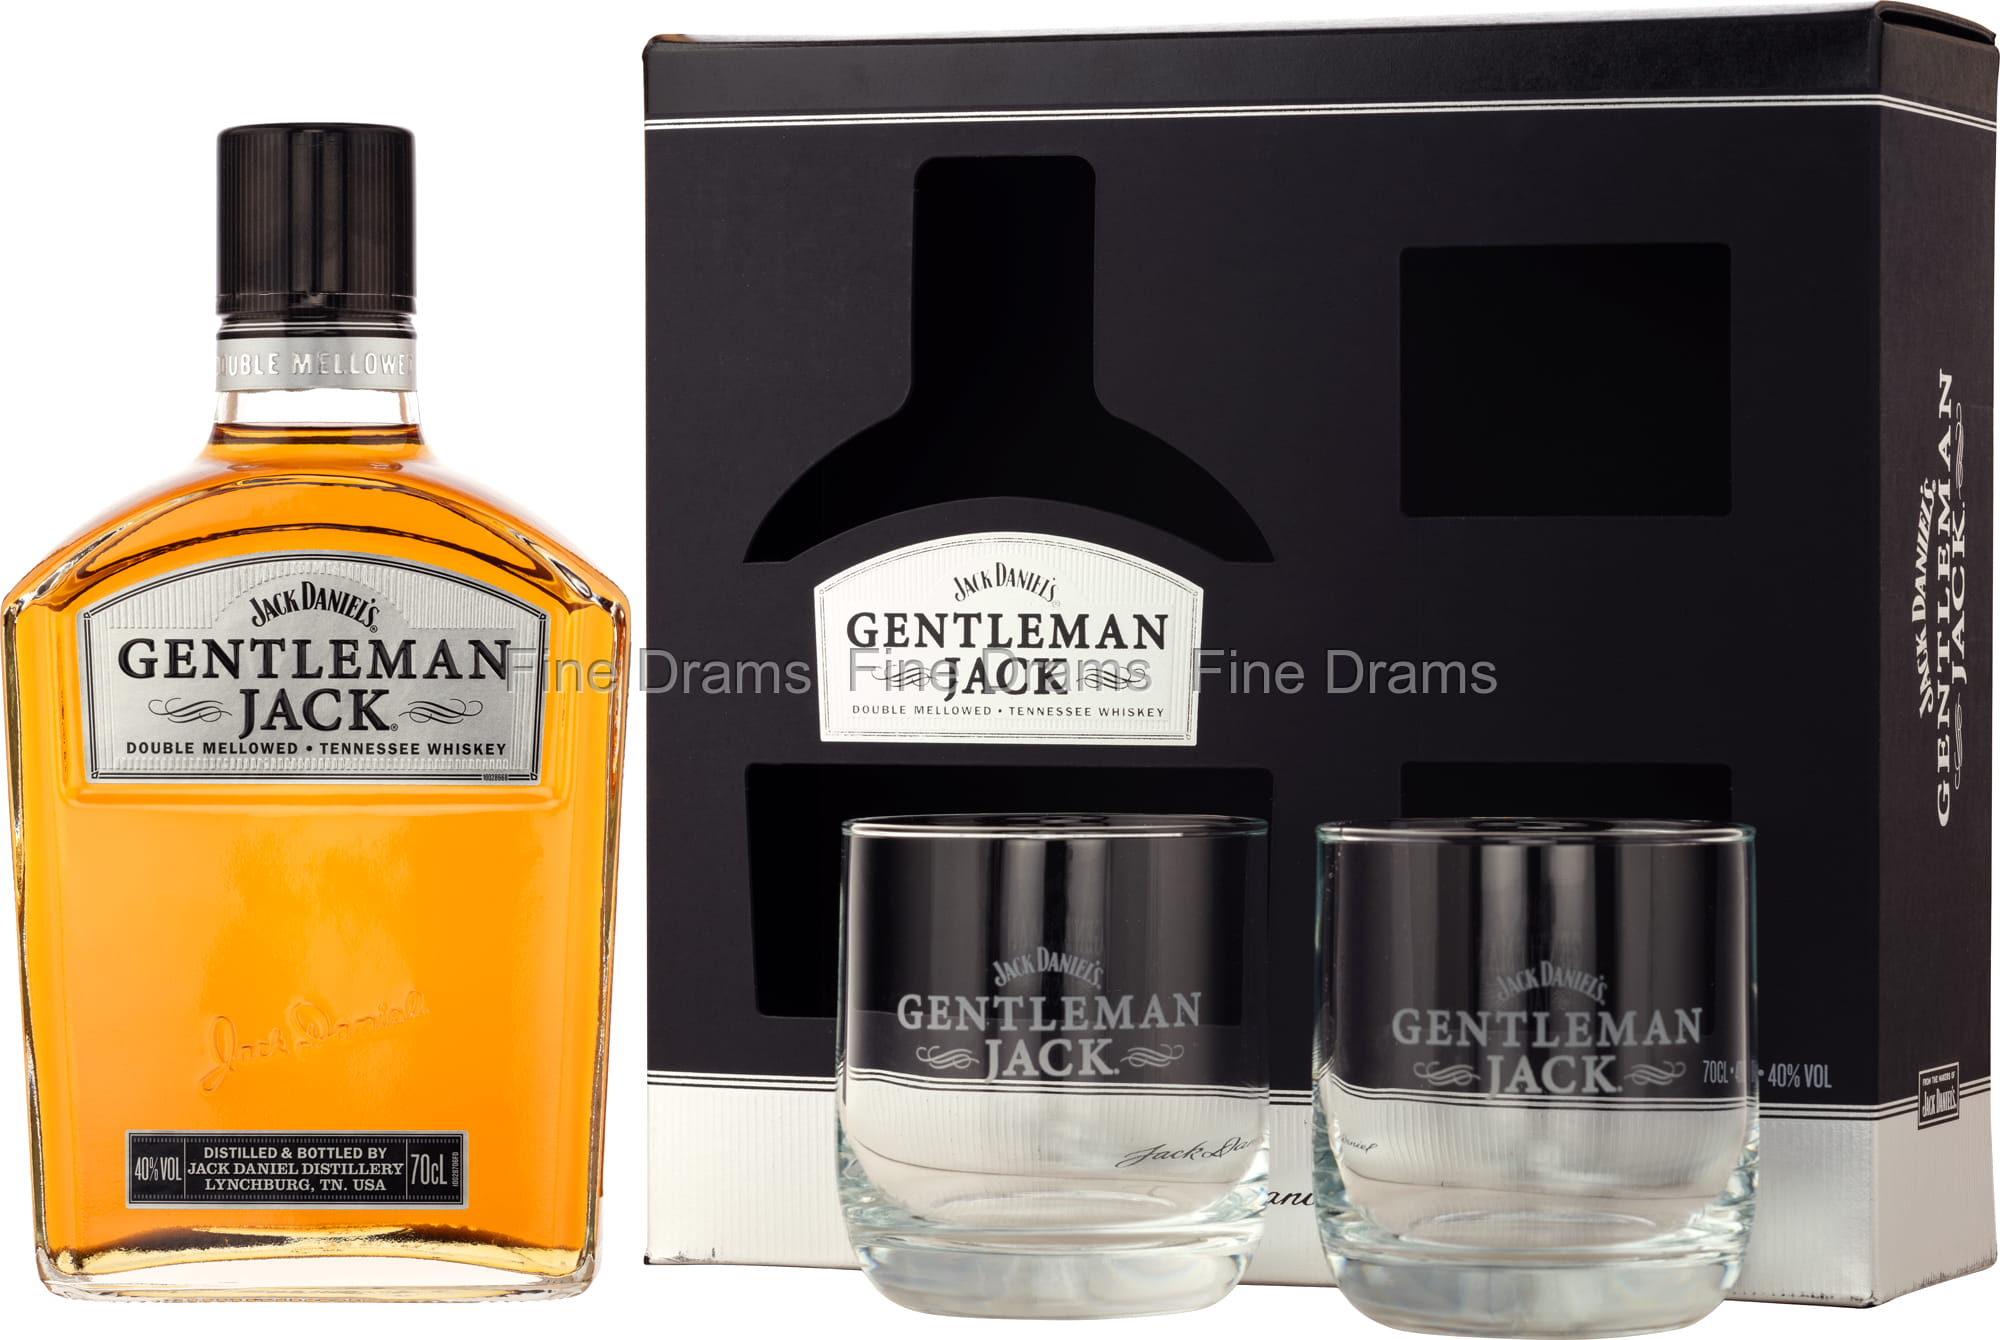 Whisky Gift Glasses Jack Daniel\'s - Gentleman Pack Jack 2